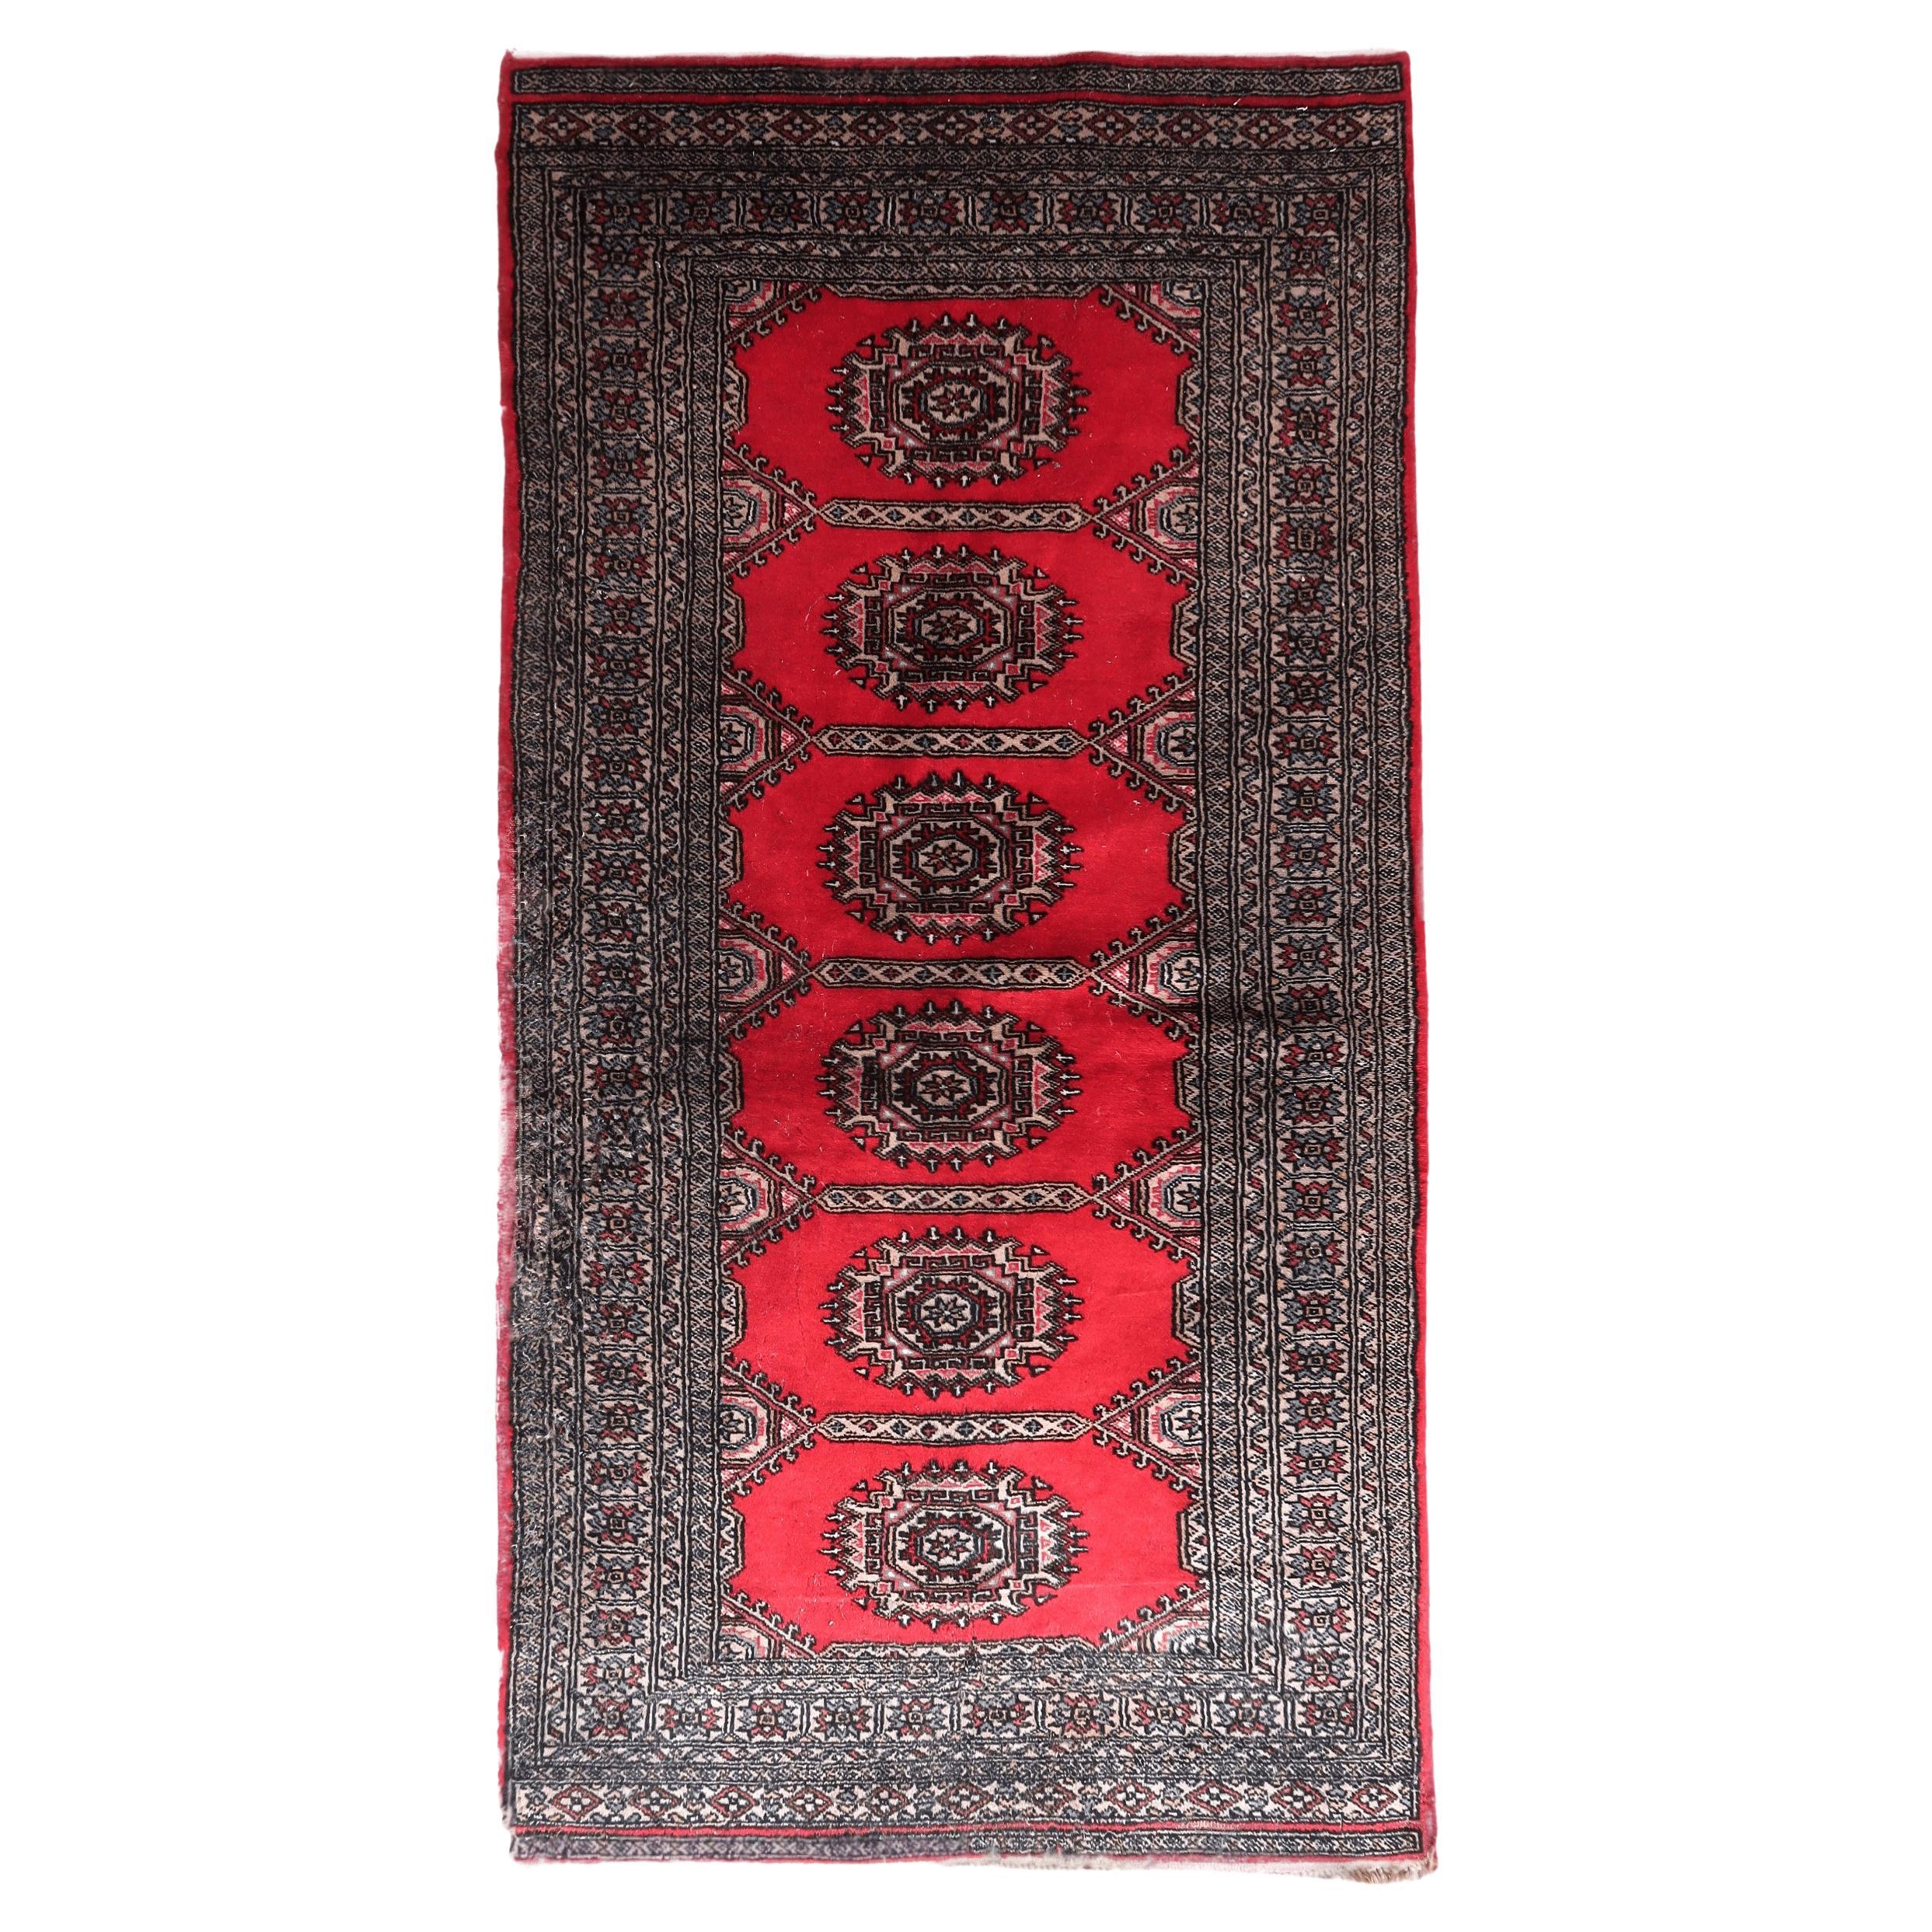 Handmade Vintage Uzbek Bukhara Rug 3' x 6.1', 1960s - 1C1095 For Sale